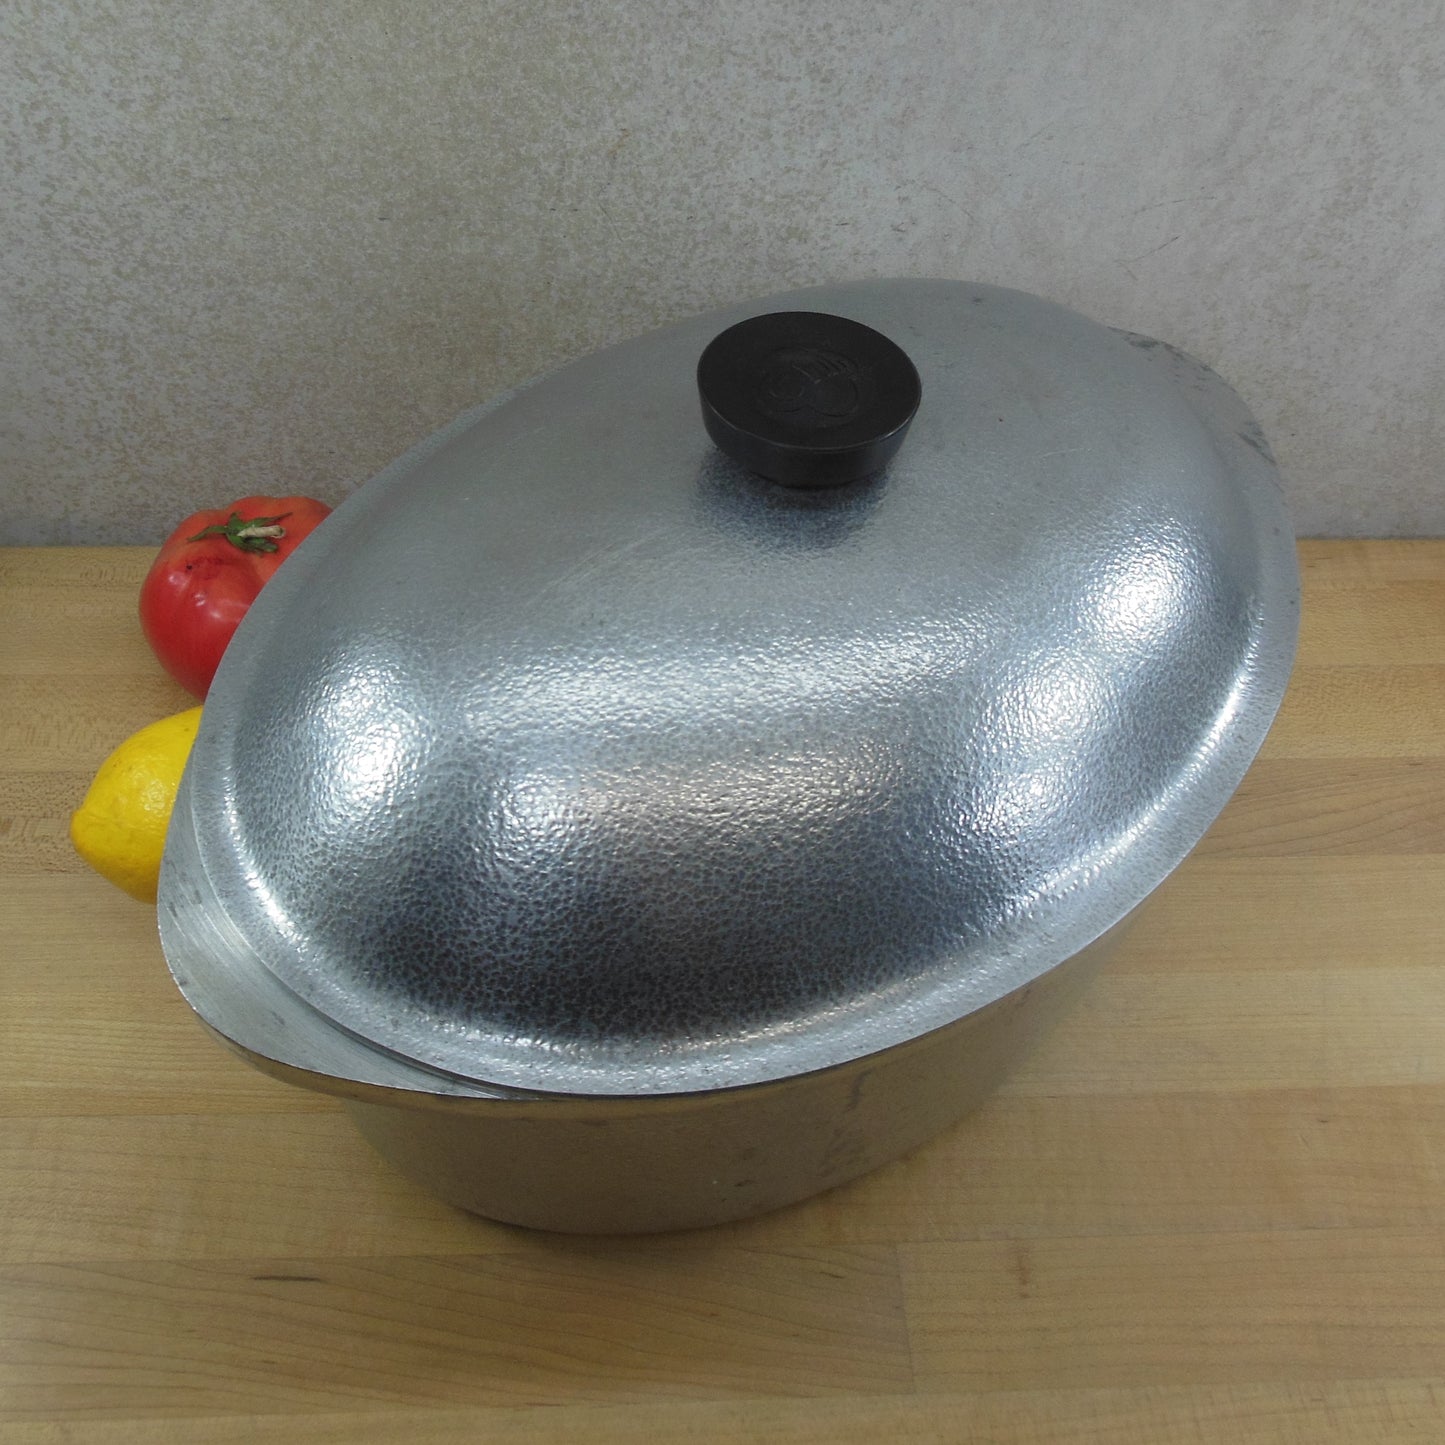 Club Aluminum Cookware Hammercraft 6 Quart Oval Roaster Pot Lid